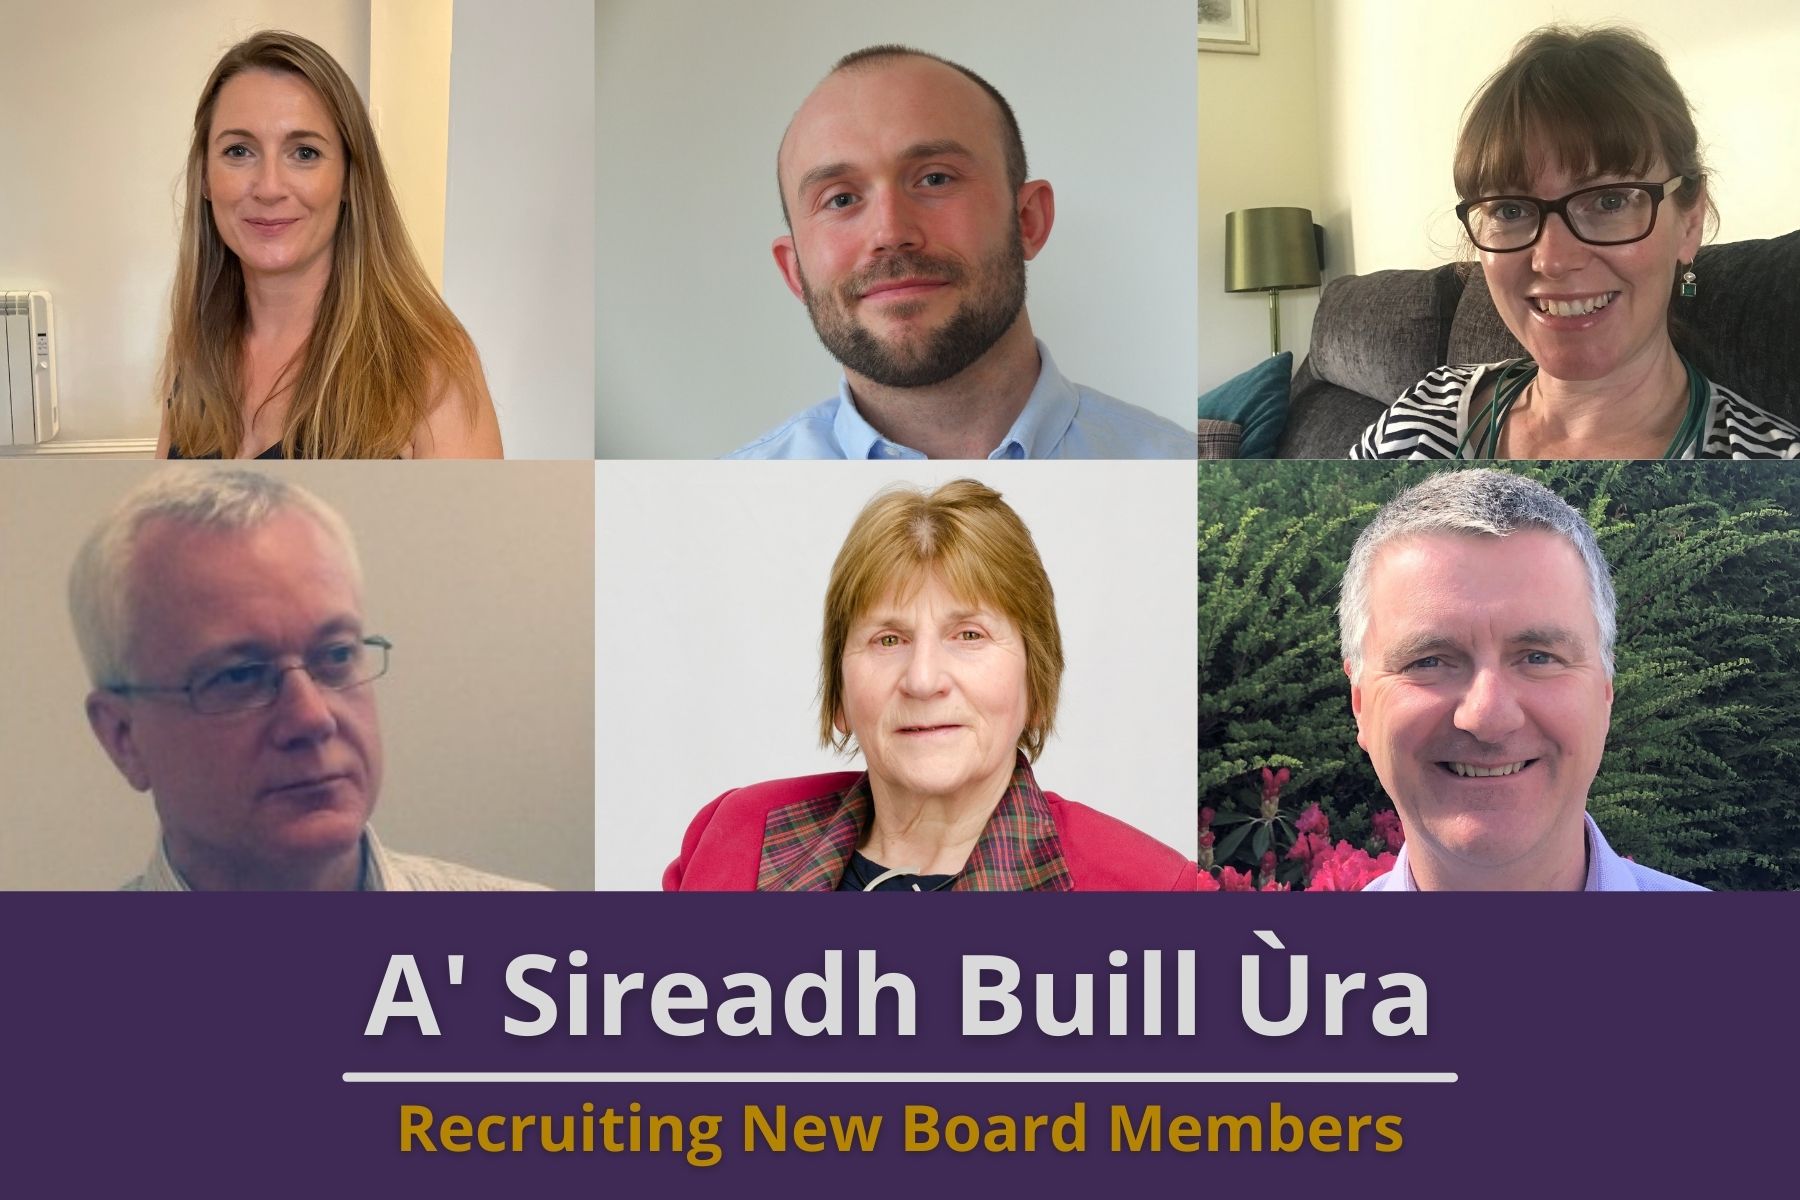 Recruitment underway for 3 new Board Members